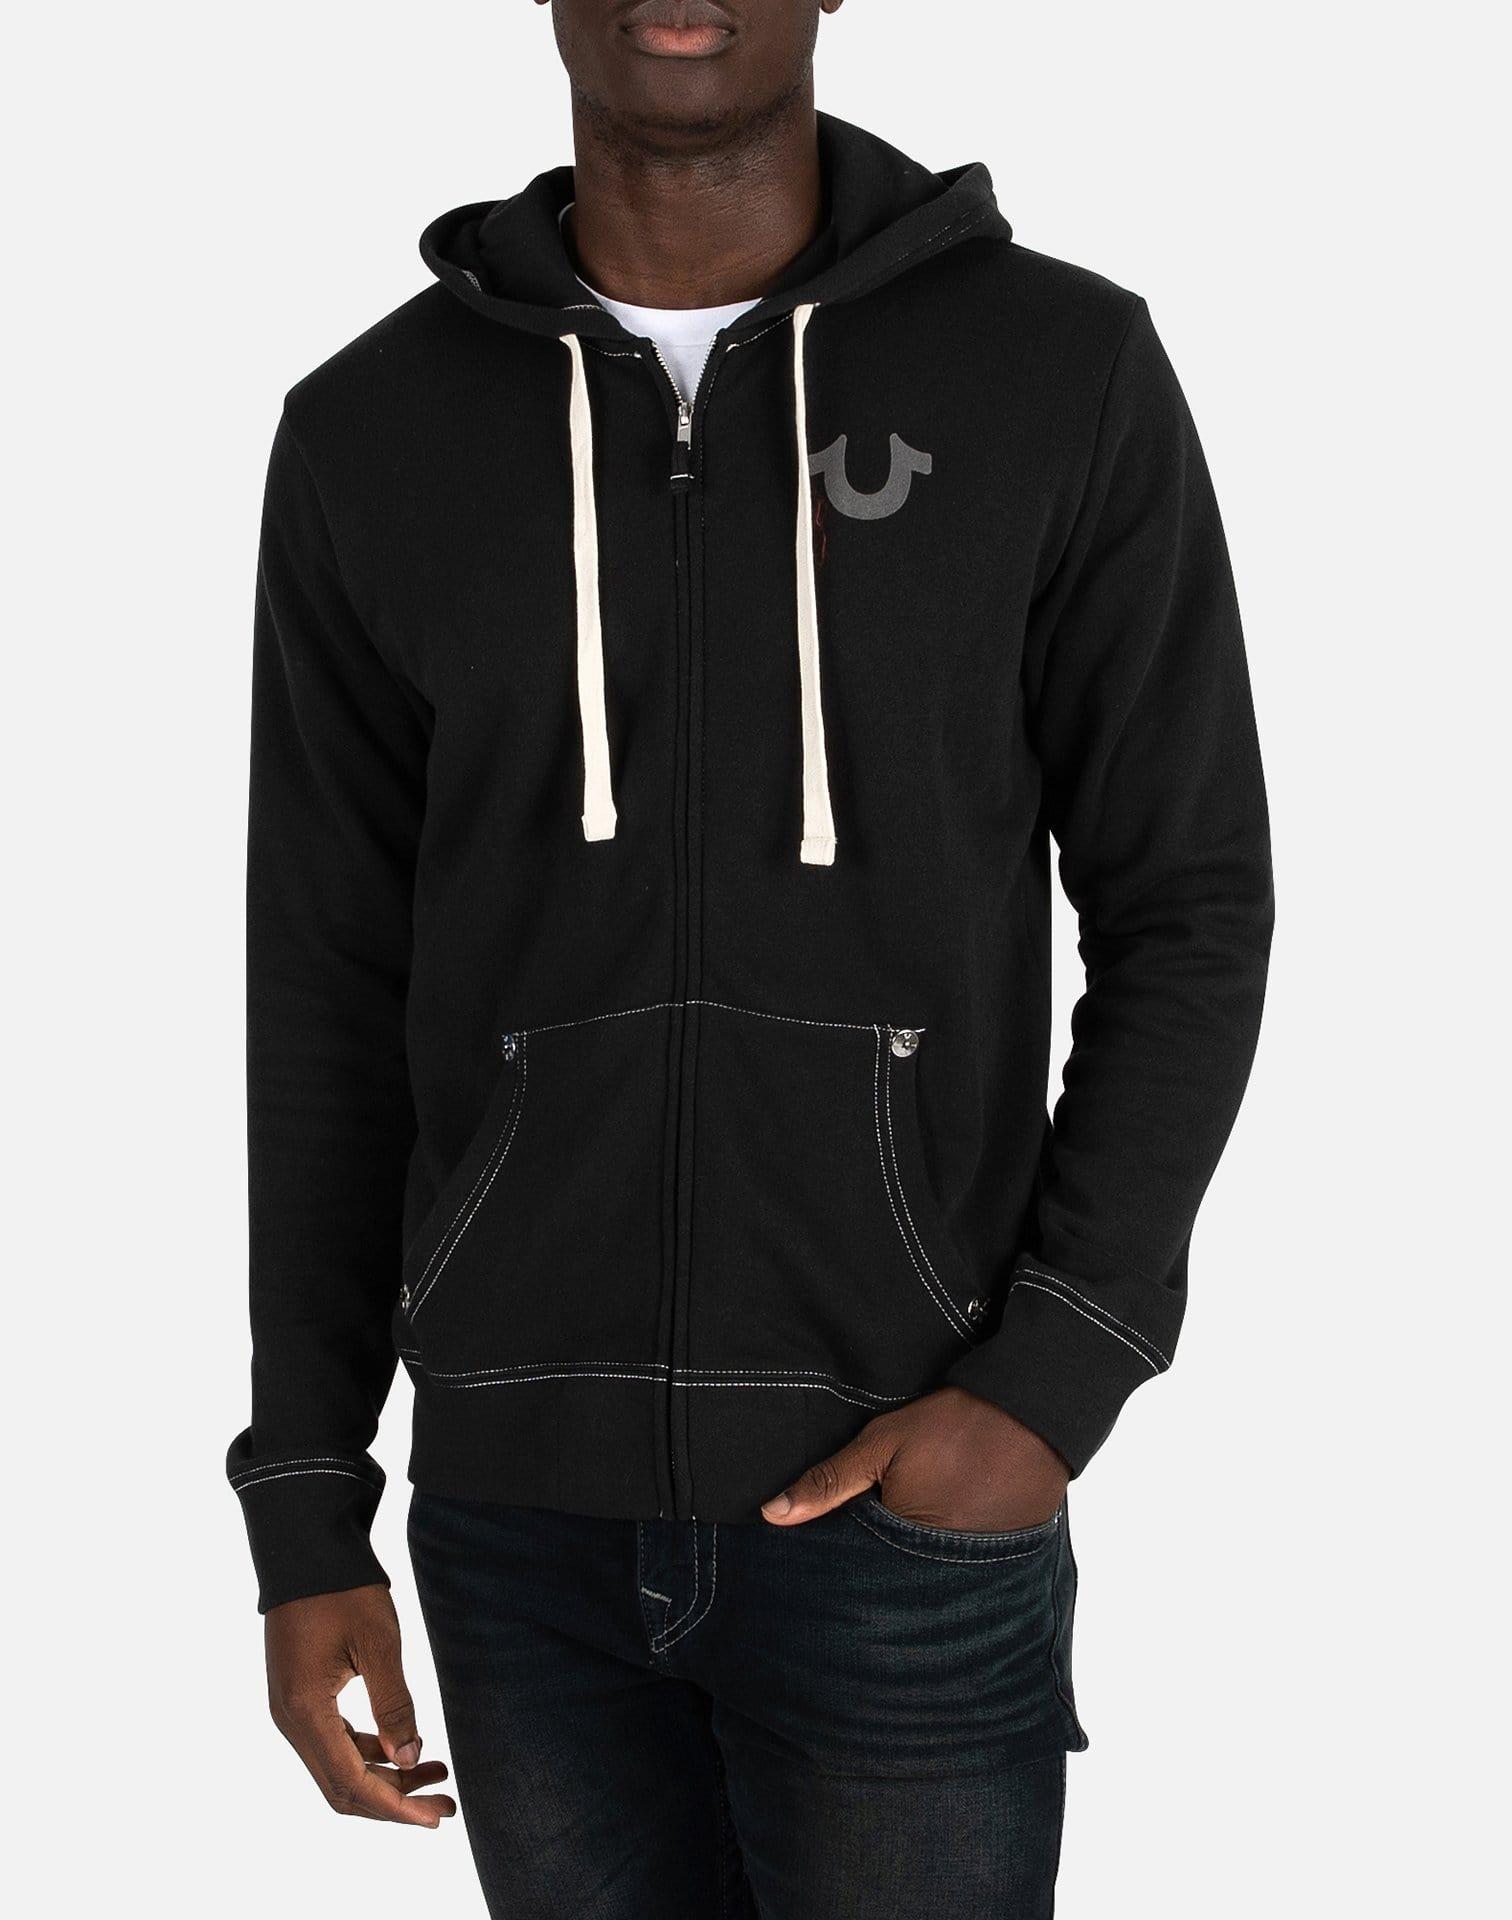 True Religion Cotton Classic Logo Zip-up Hoodie in Black for Men - Lyst